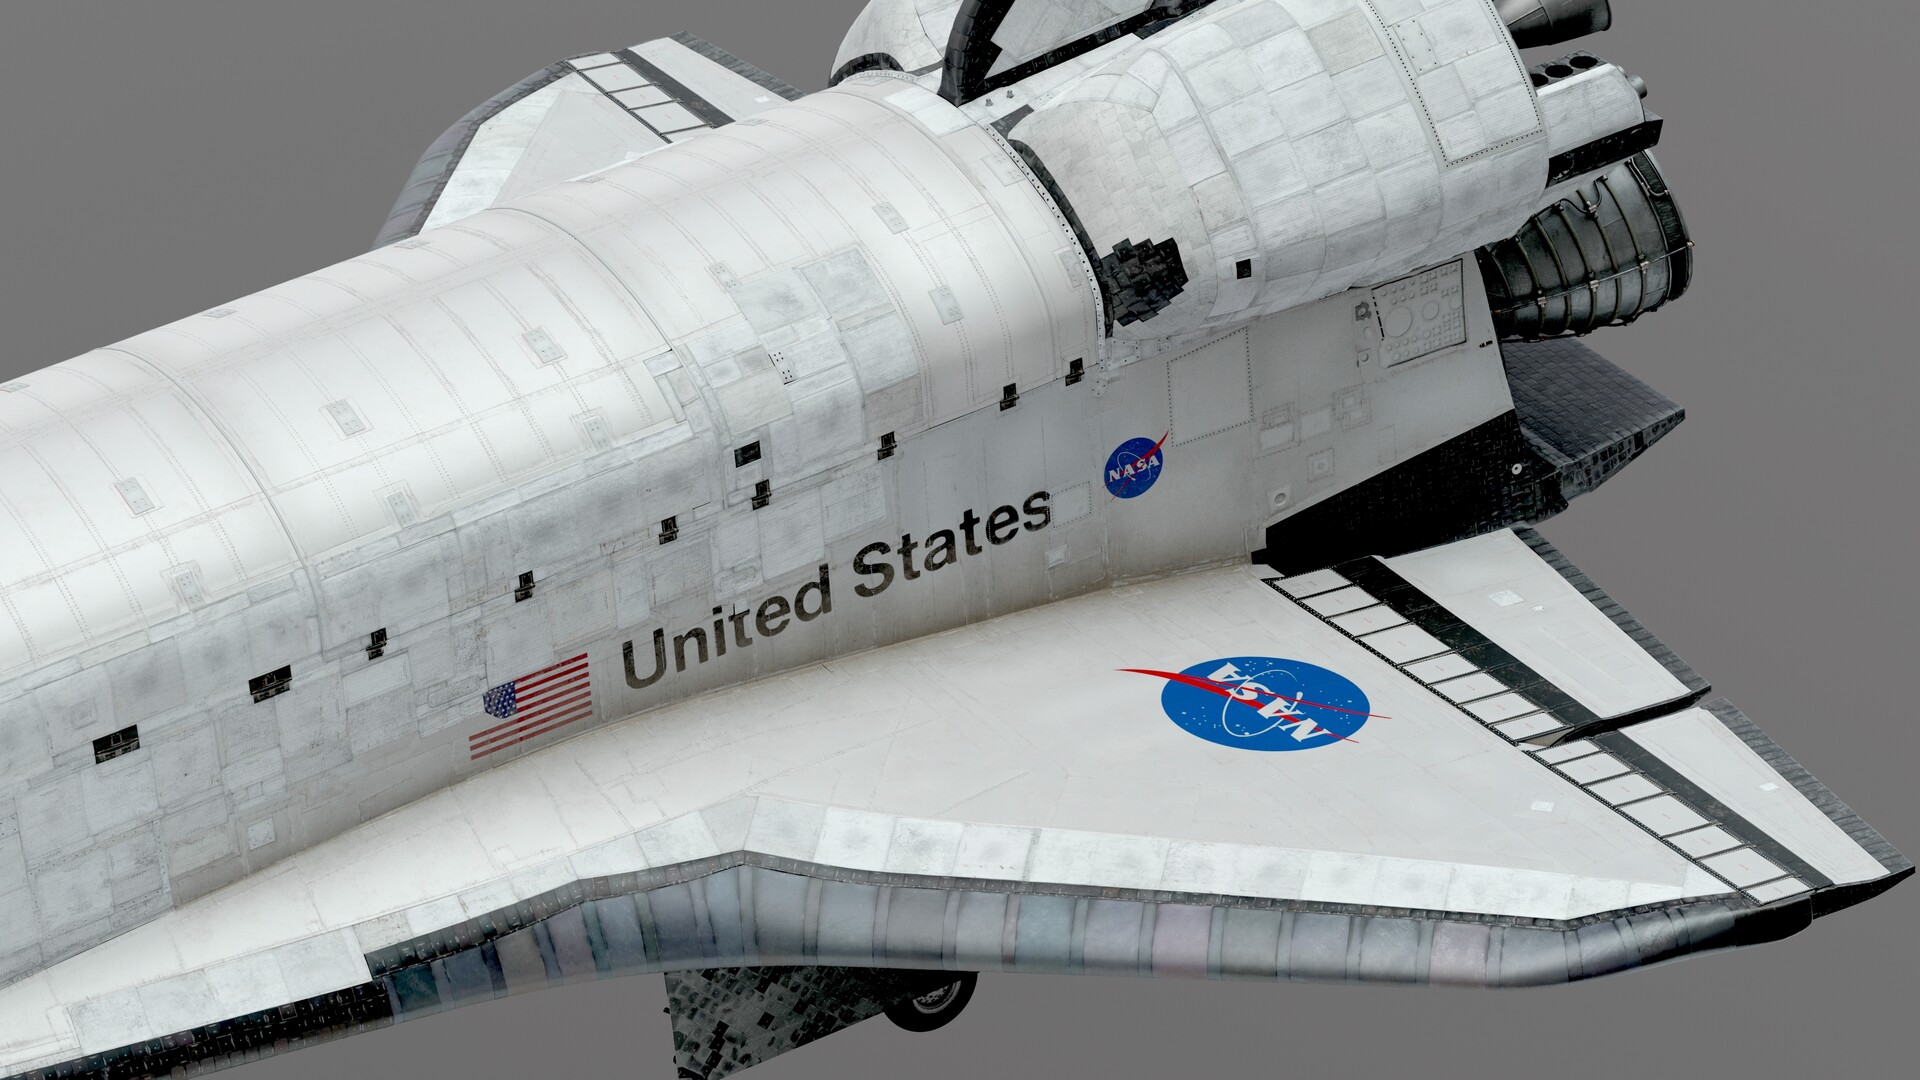 Turntable Space Shuttle Atlantis.